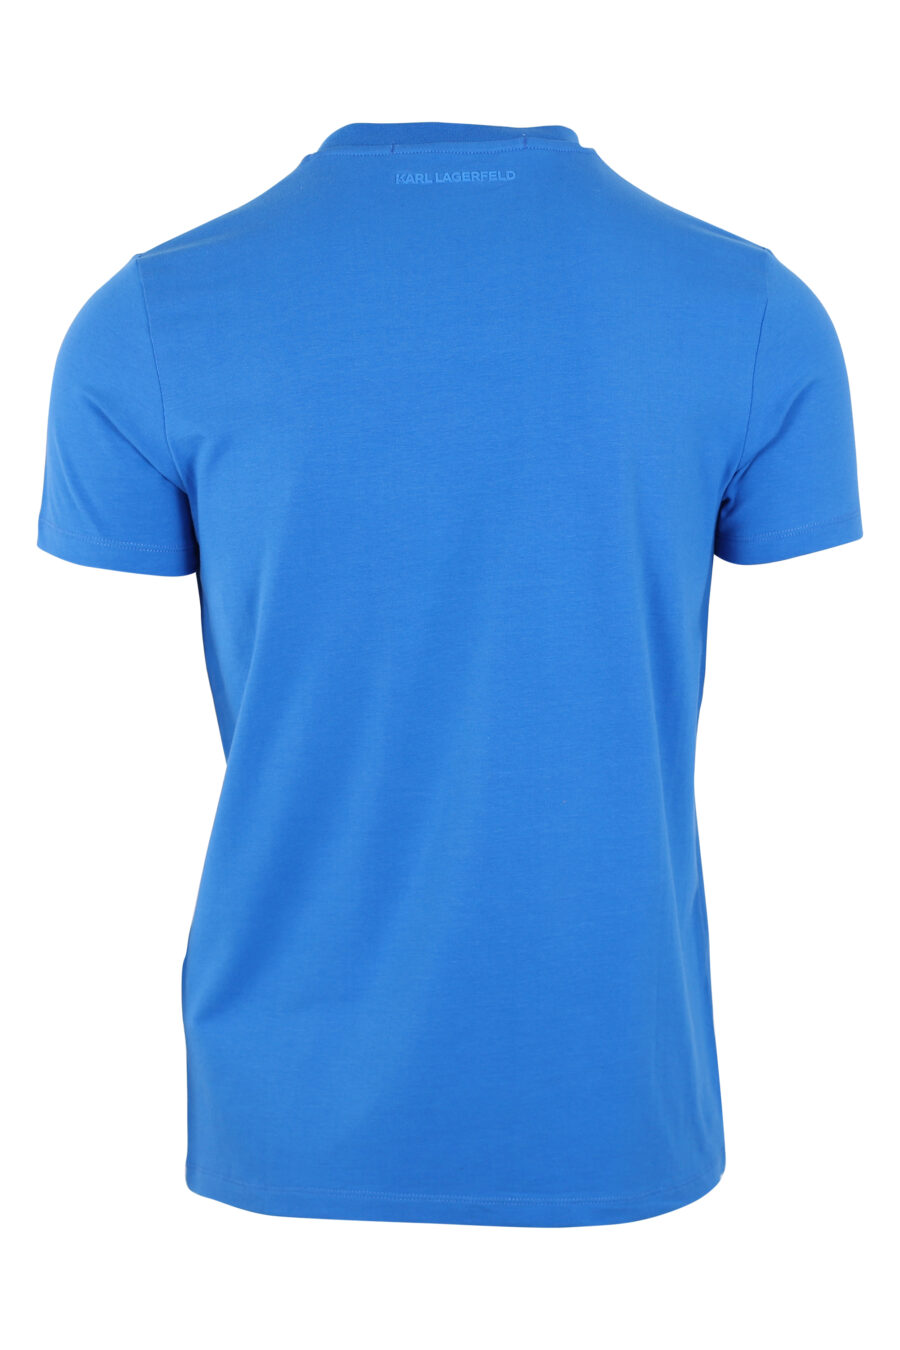 Blue T-shirt with contrasting black "karl" maxilogo - IMG 9448